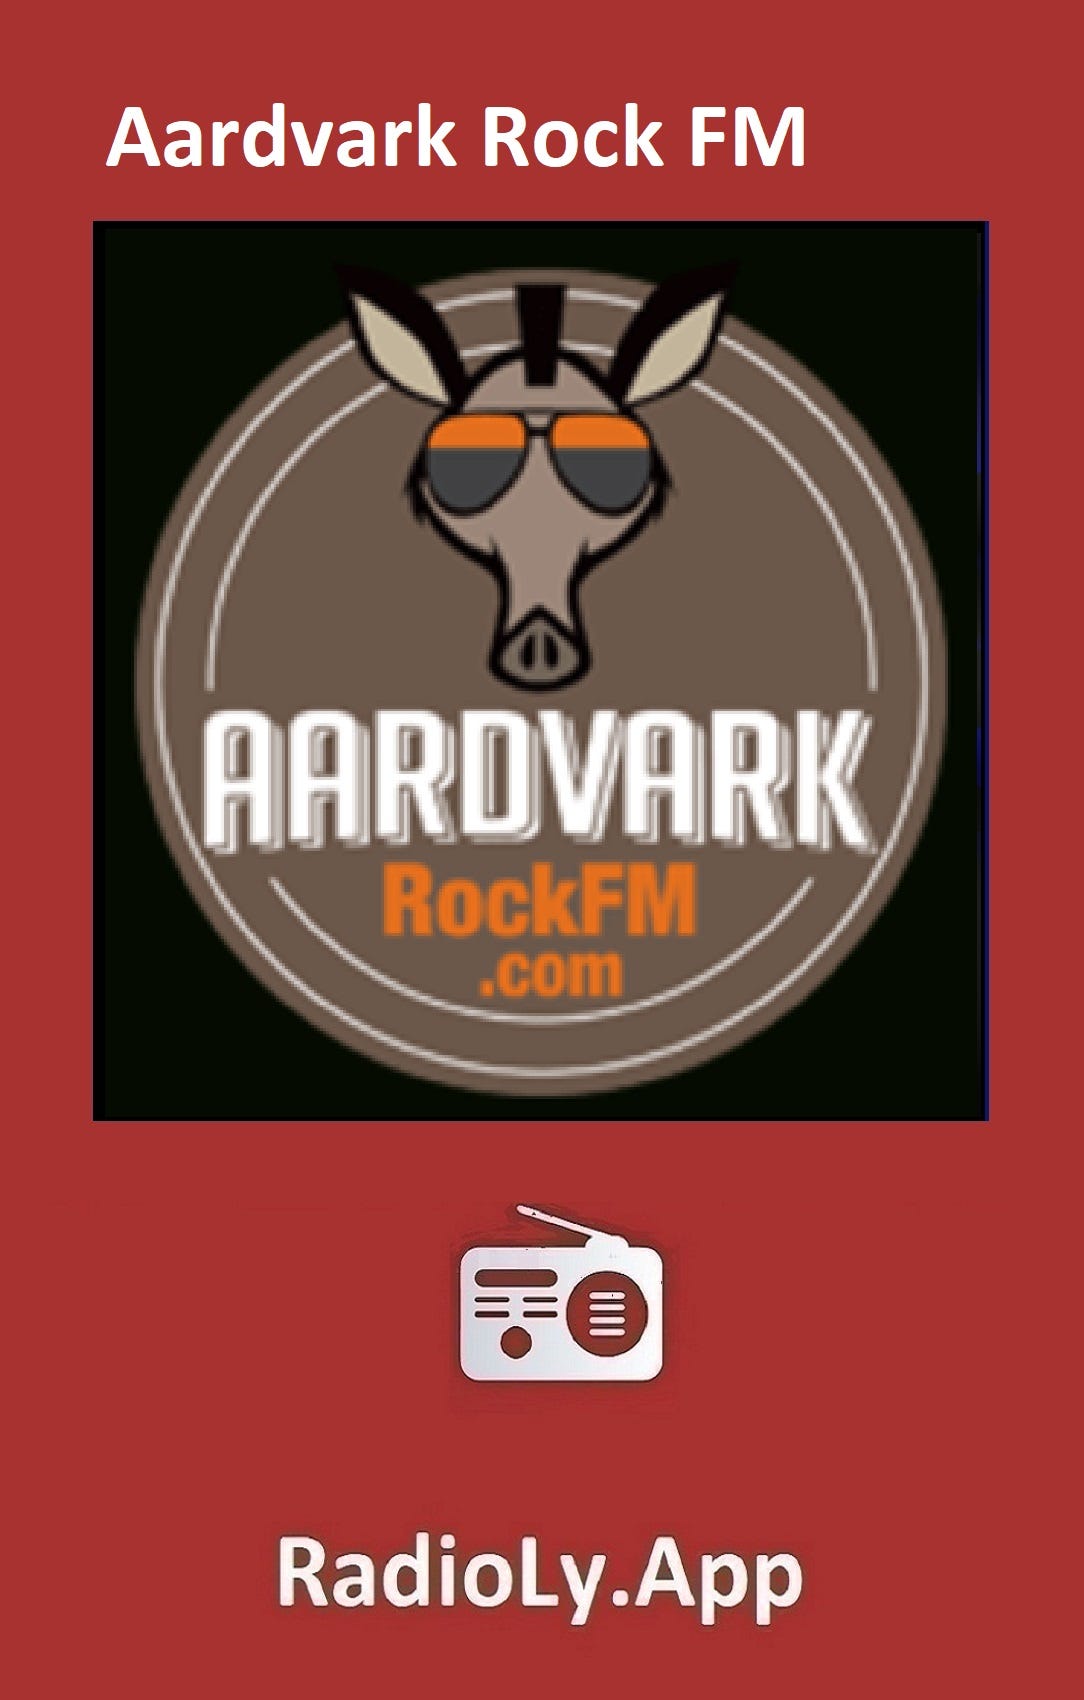 Aardvark Rock FM- USA Internet Radio Station Online — Radioly - Radioly -  Medium